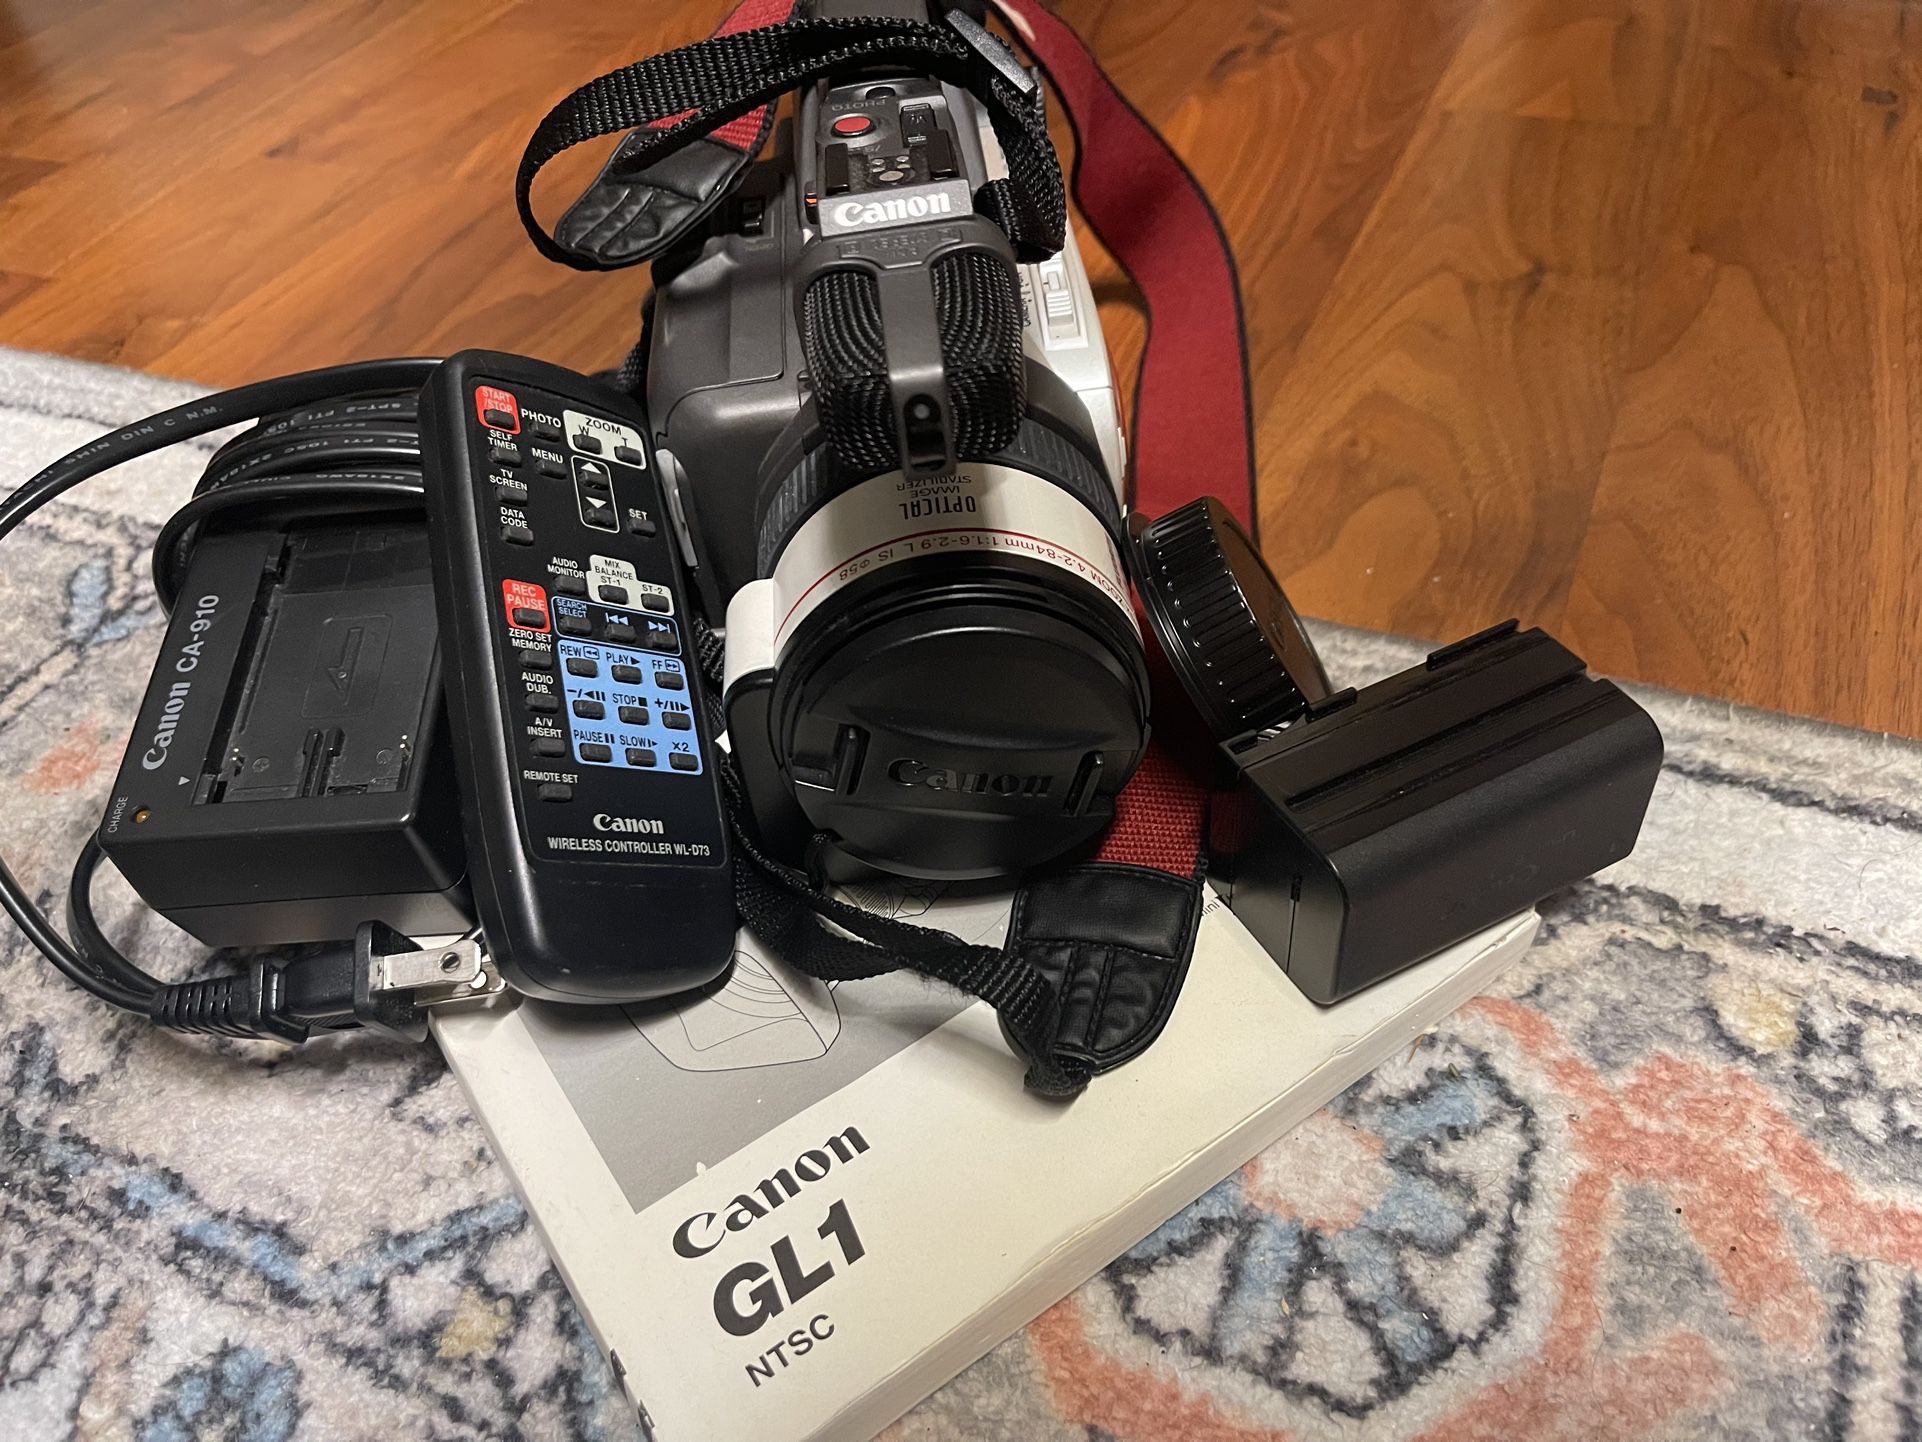 Canon GL1 NTSC Digital Video Camcorder 